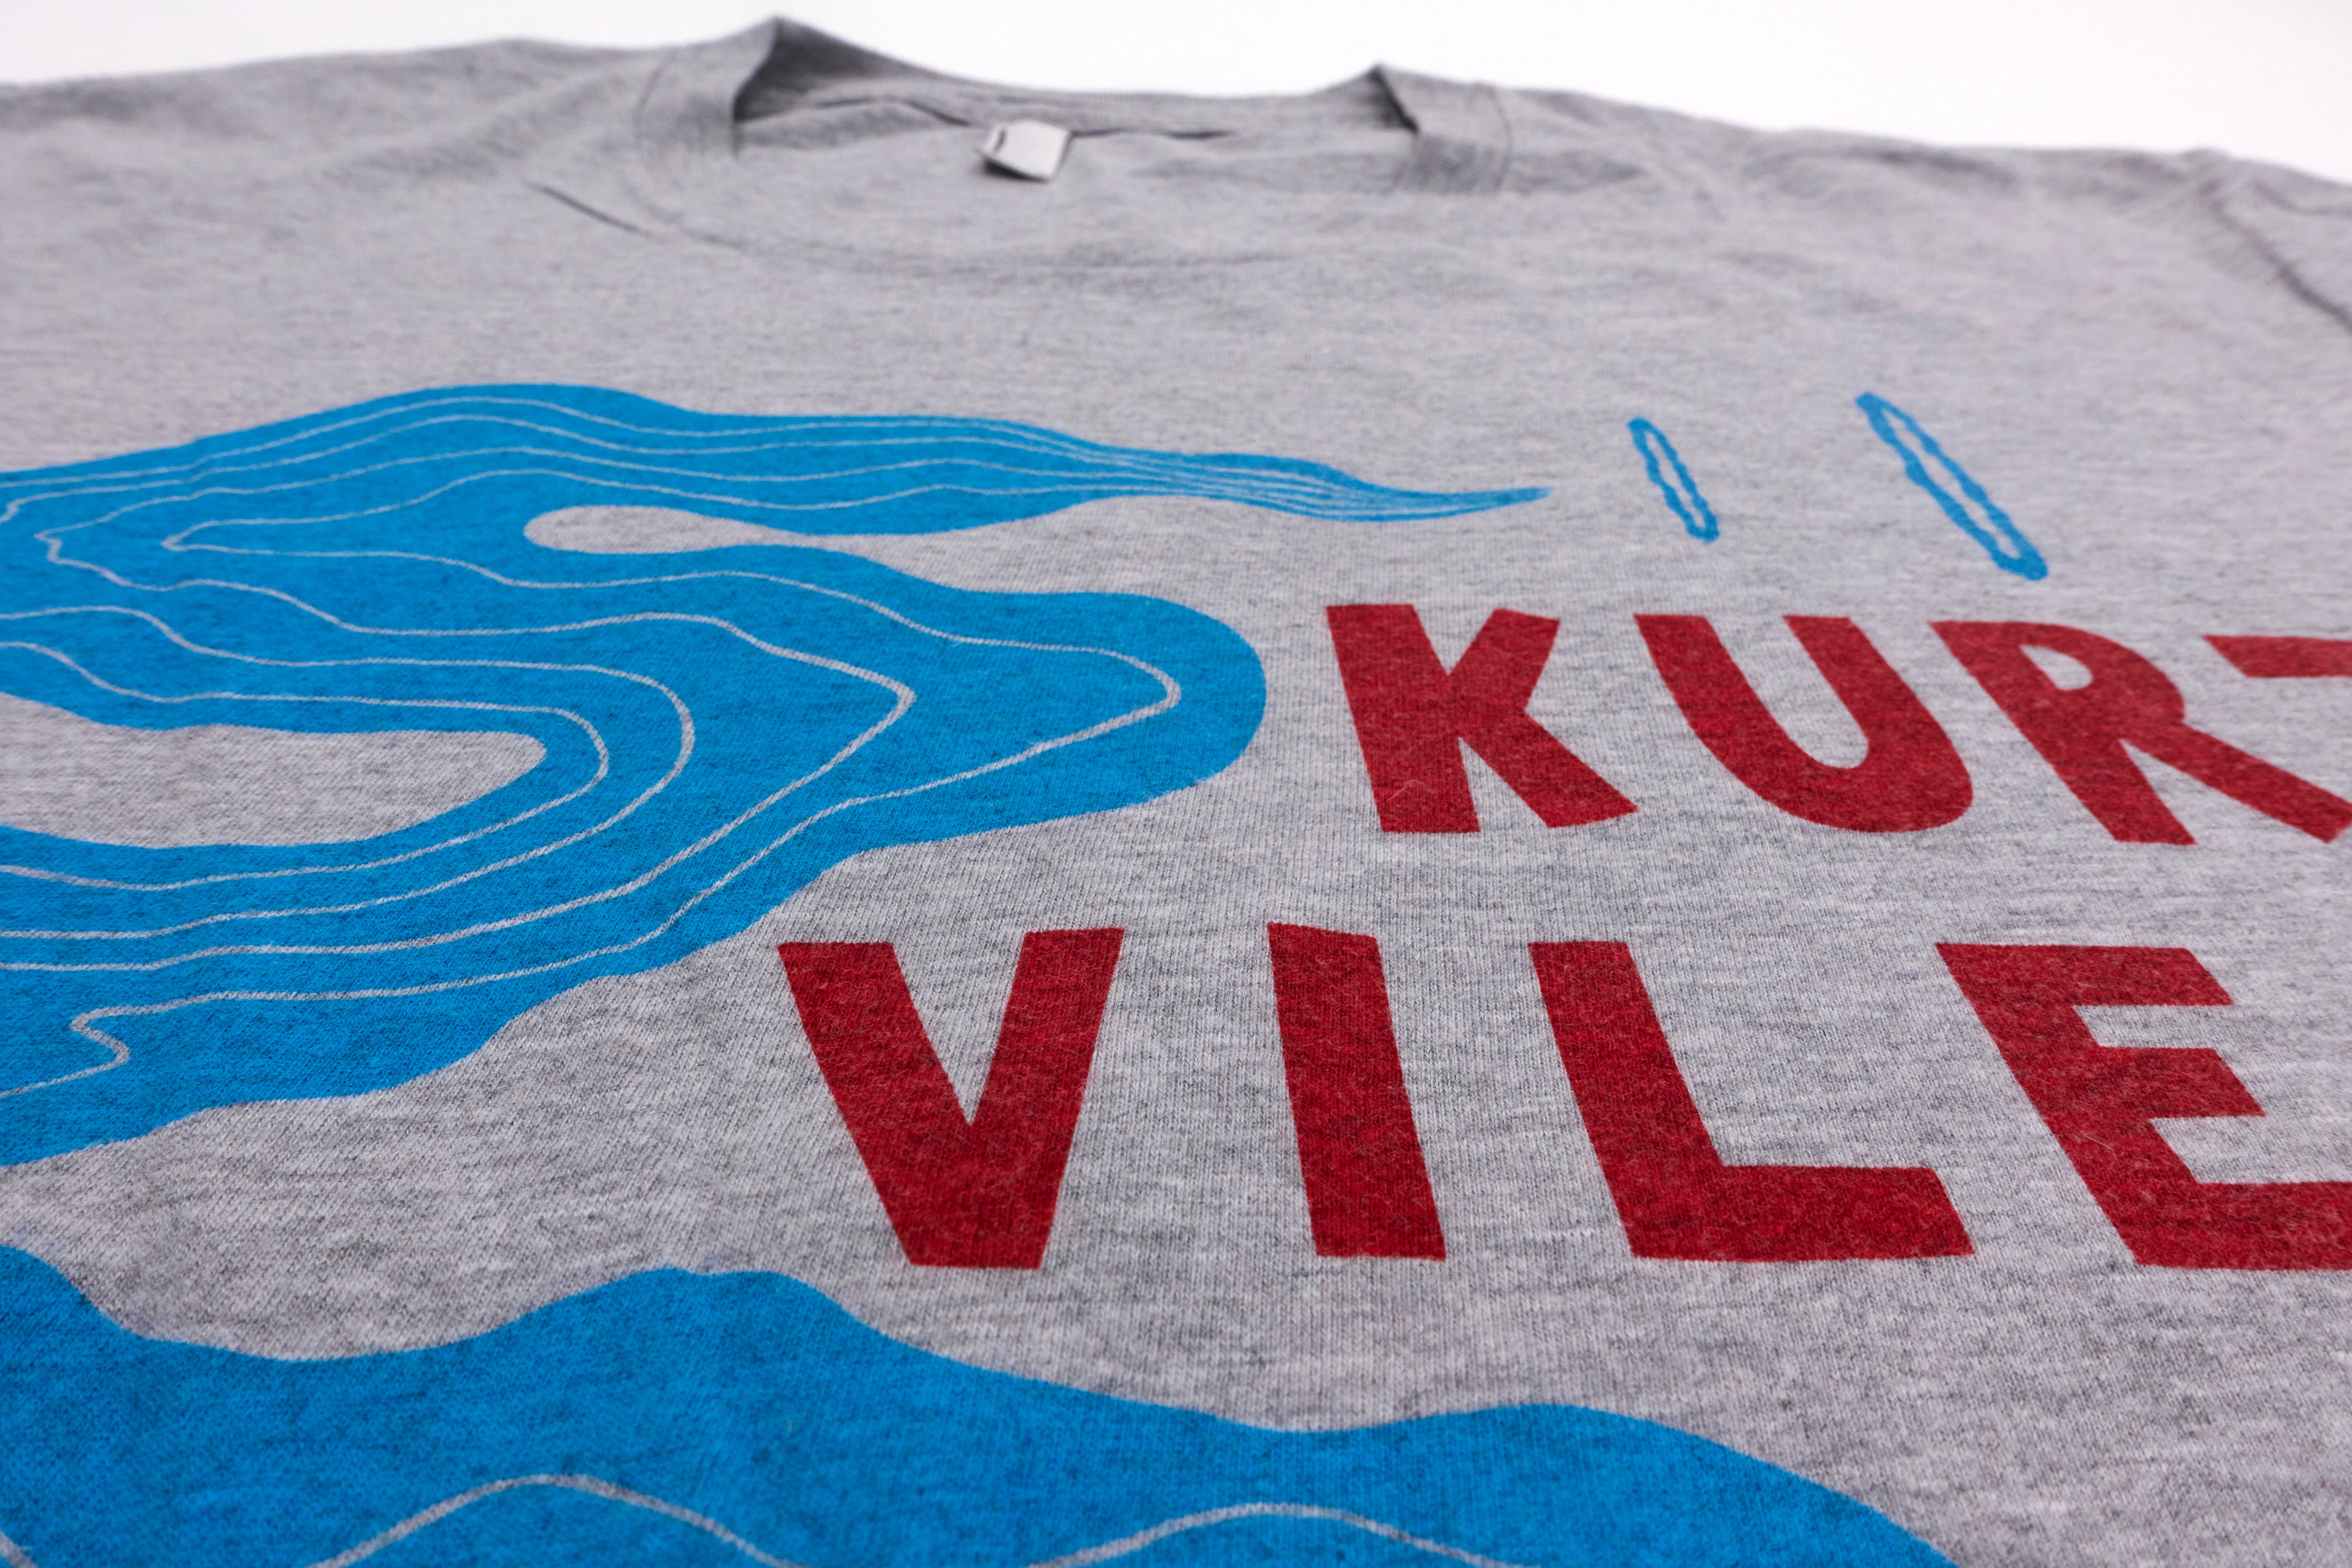 Kurt Vile – Guitar Smoke by ESPO Steve Powers 2013 Tour Shirt Size Large